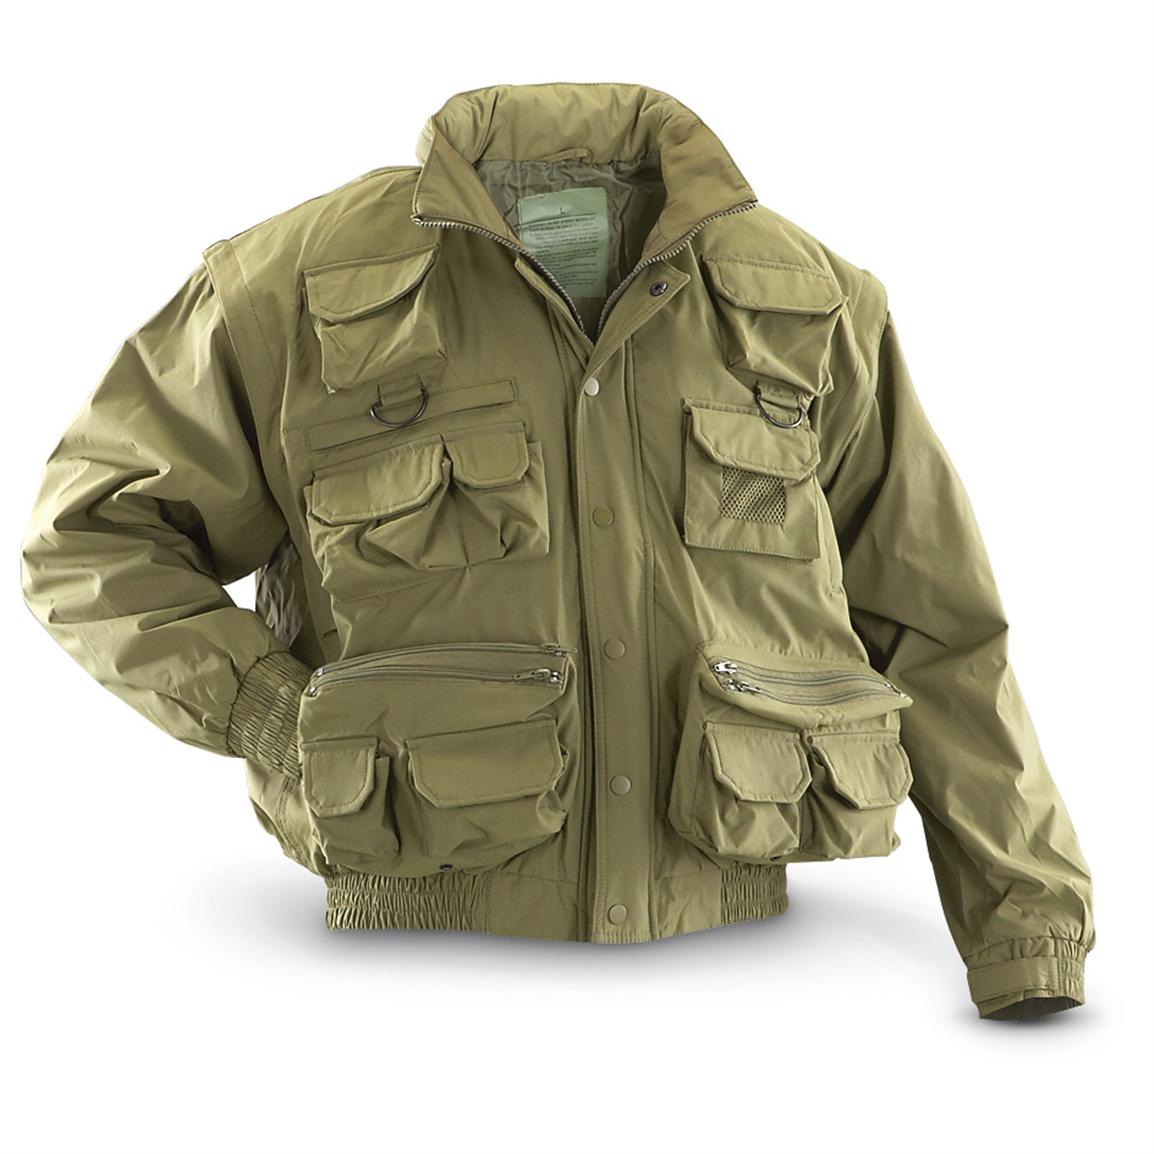 Mil.-spec Tactical Duty Jacket - 584597, Rain Gear & Ponchos at ...